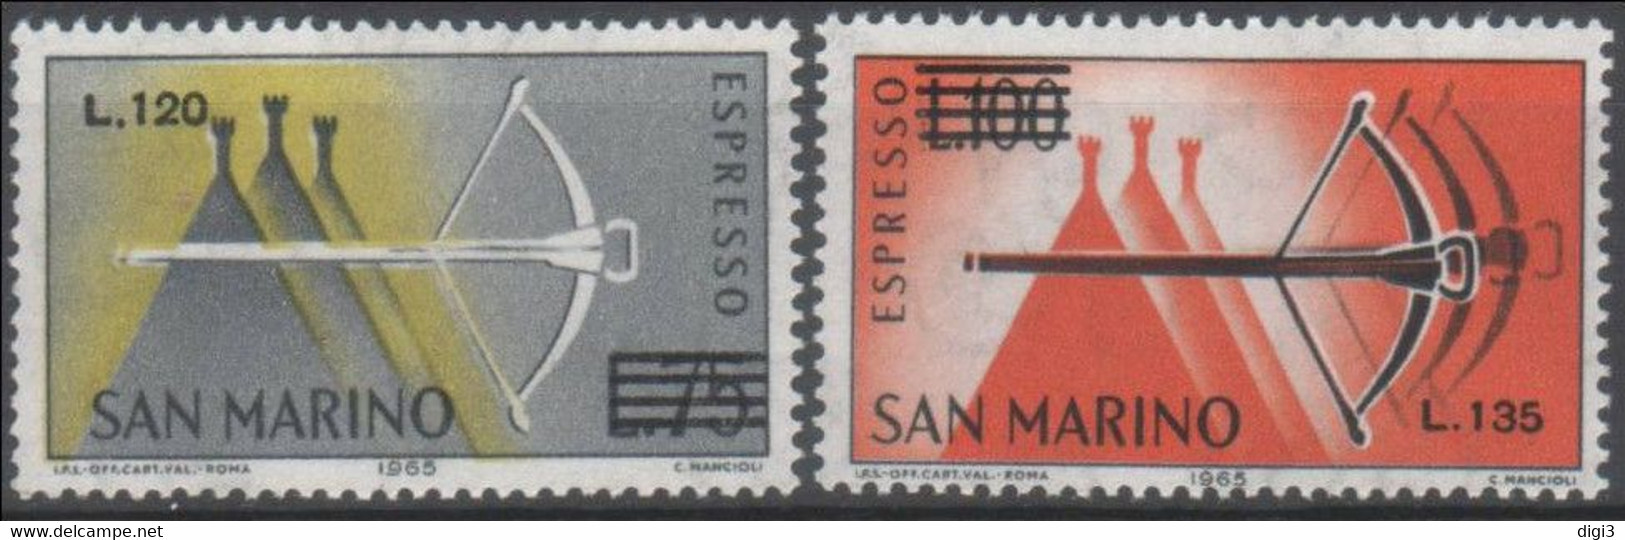 San Marino, 1965, Espressi, Francobolli Balestra Con Valori Soprastampati, Serie Completa, MNH** - Exprespost